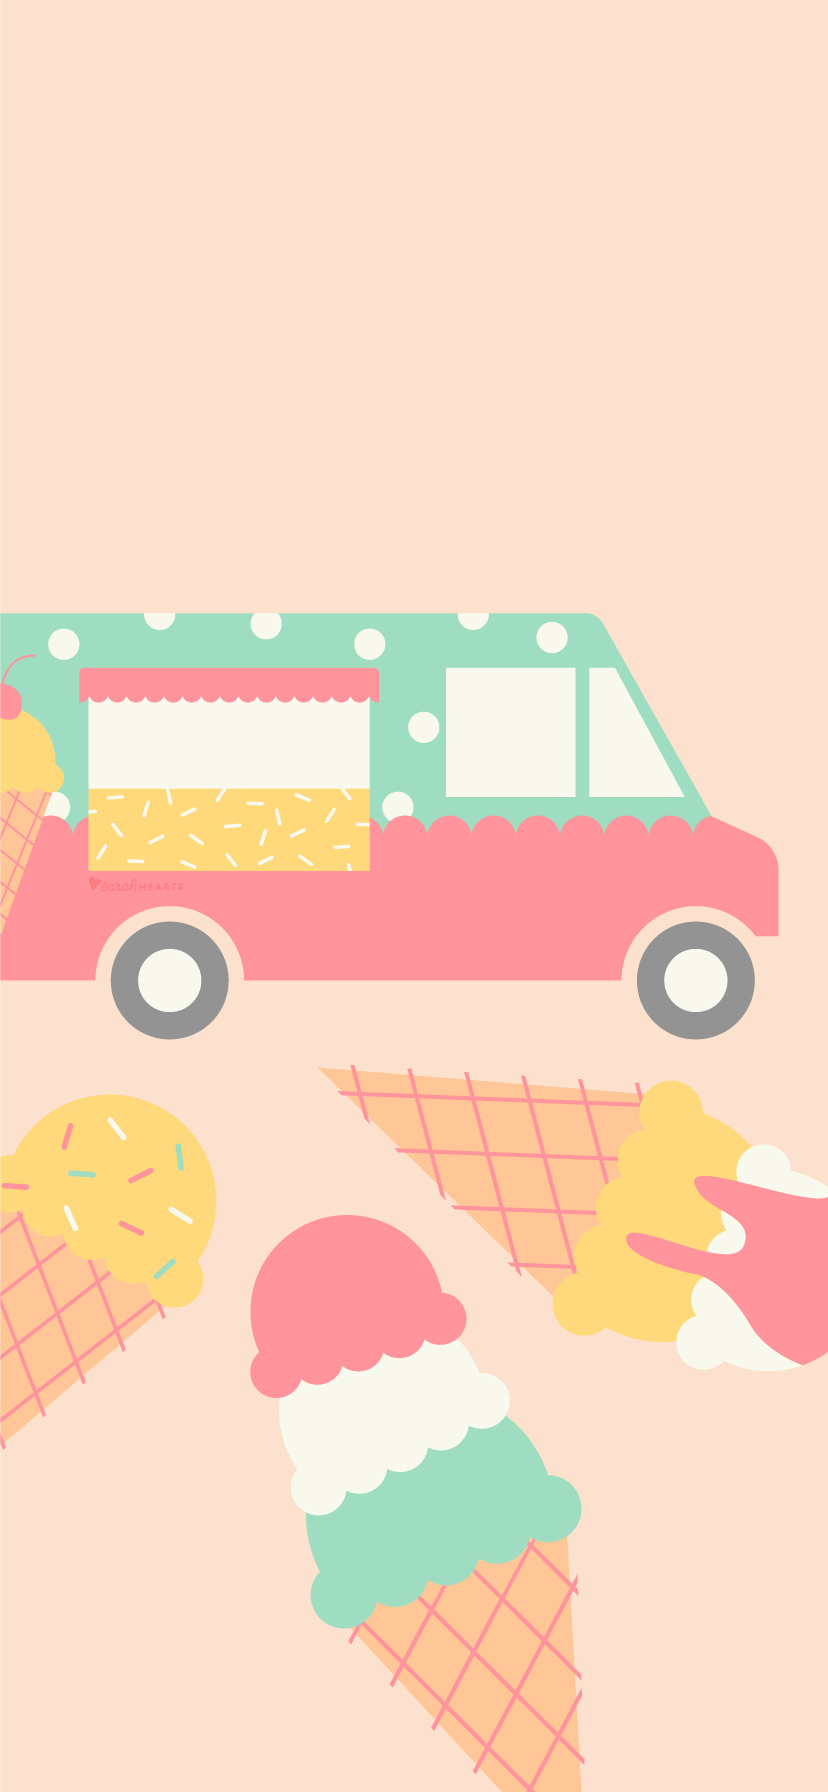 iPhone Ice Cream Truck Calendar Wallpaper - Sarah Hearts